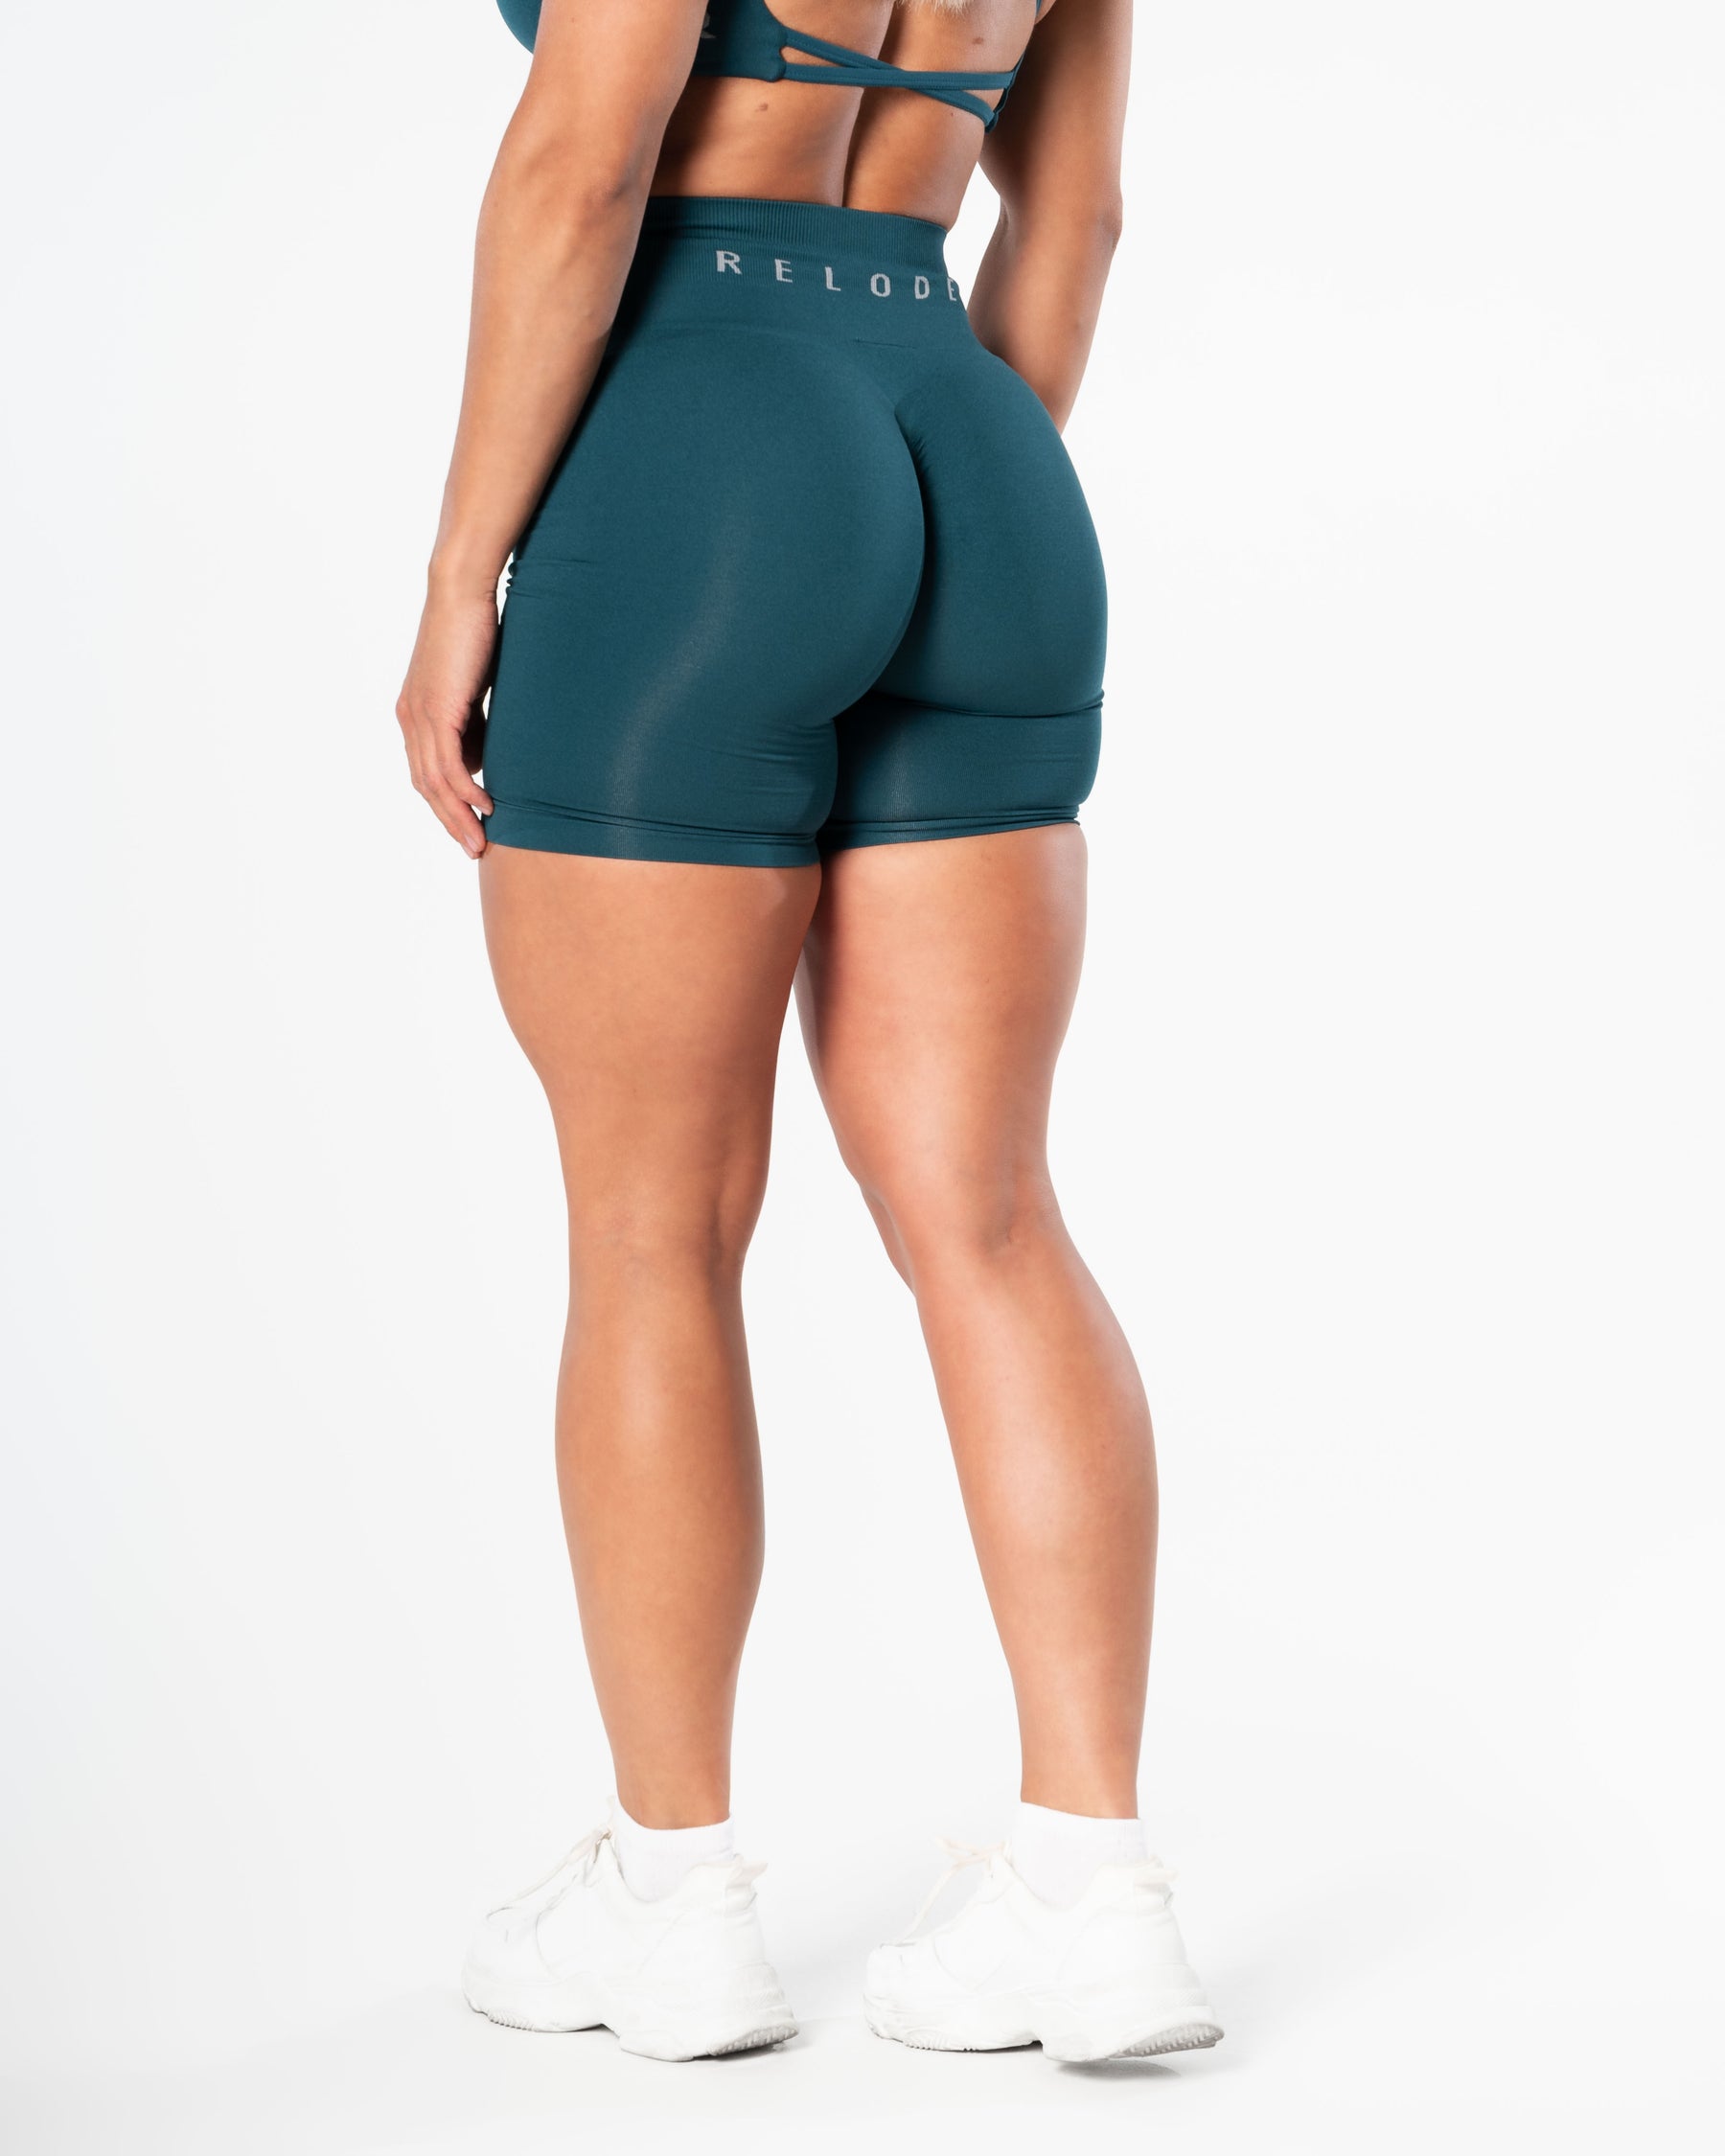 Prime Scrunch Shorts - Teal green - RELODE